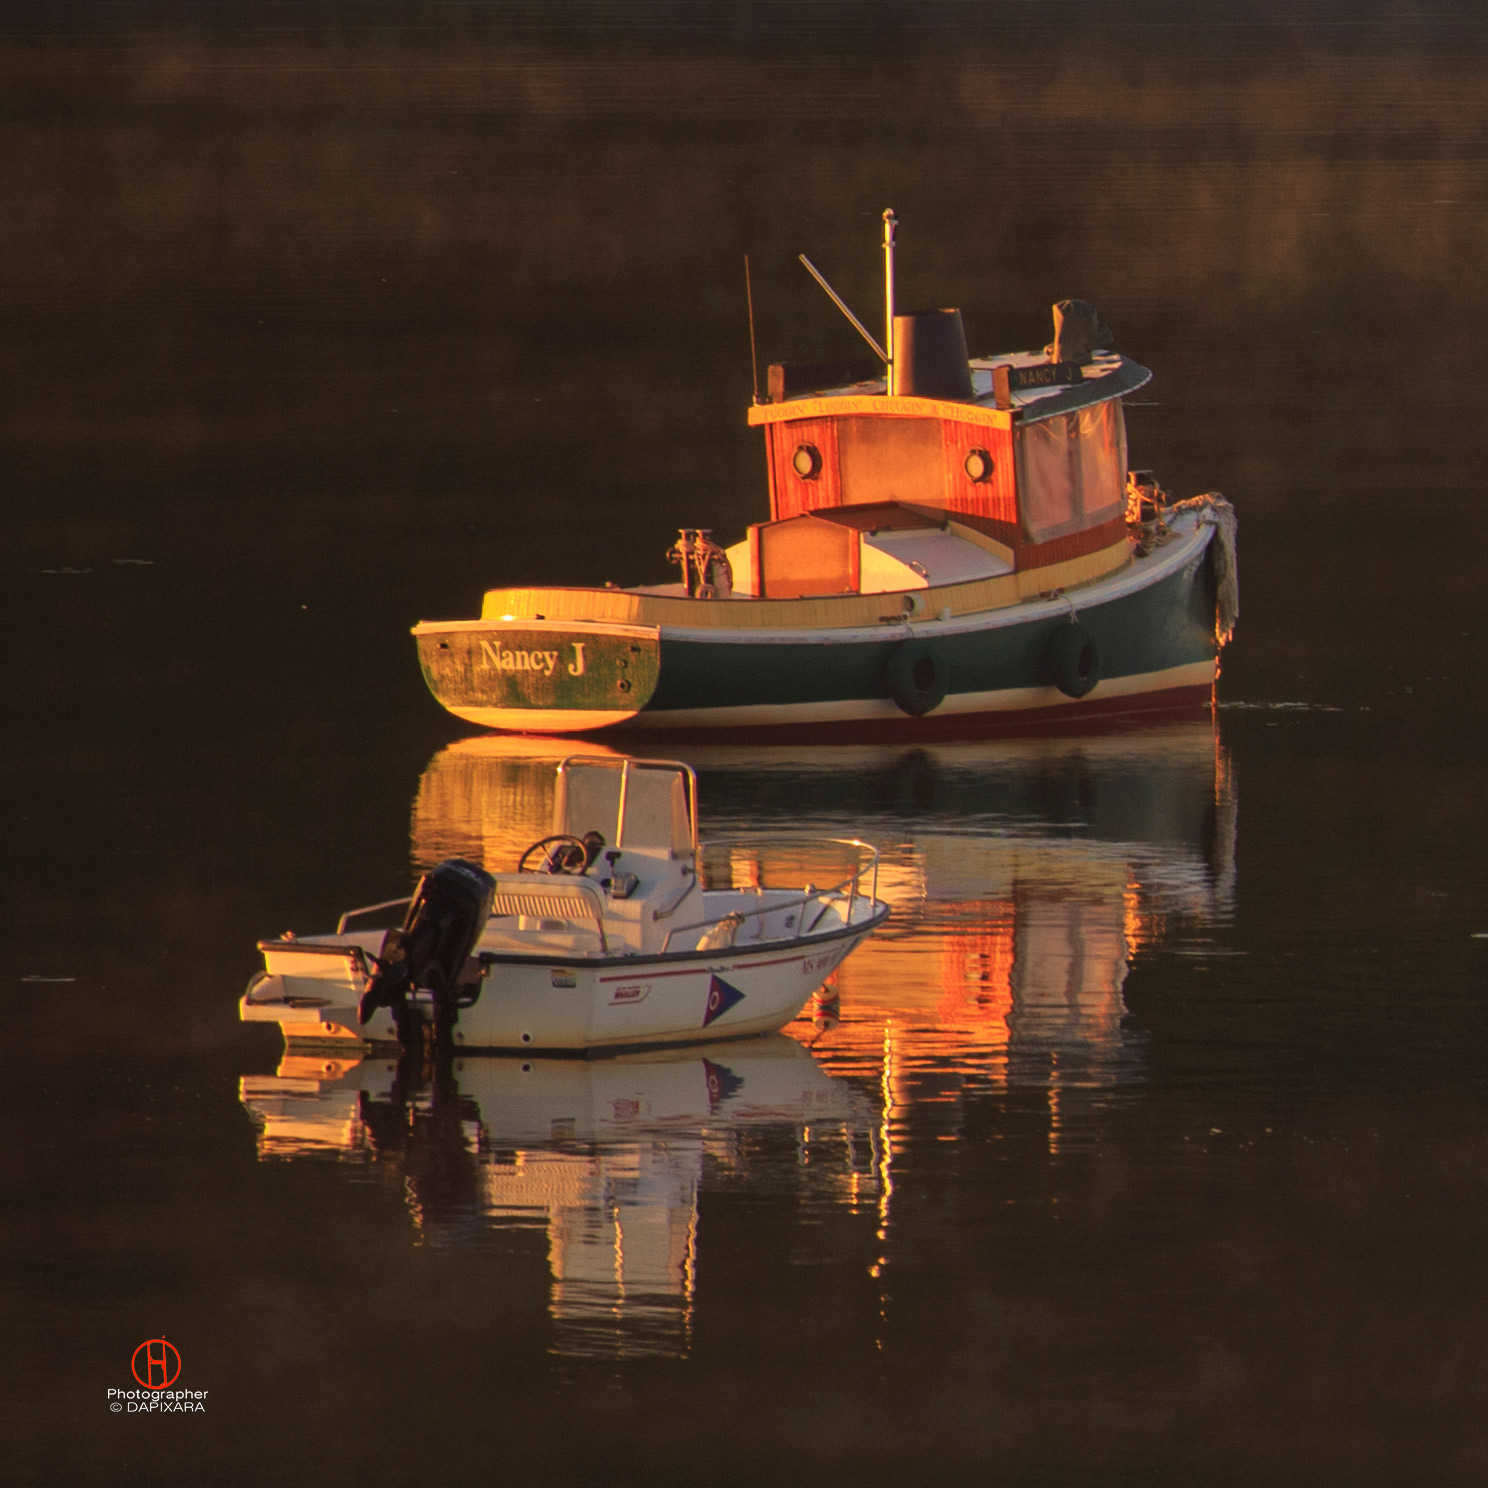 Misty Sunrise With Boat. Cape Cod photos by photographer Dapixara.